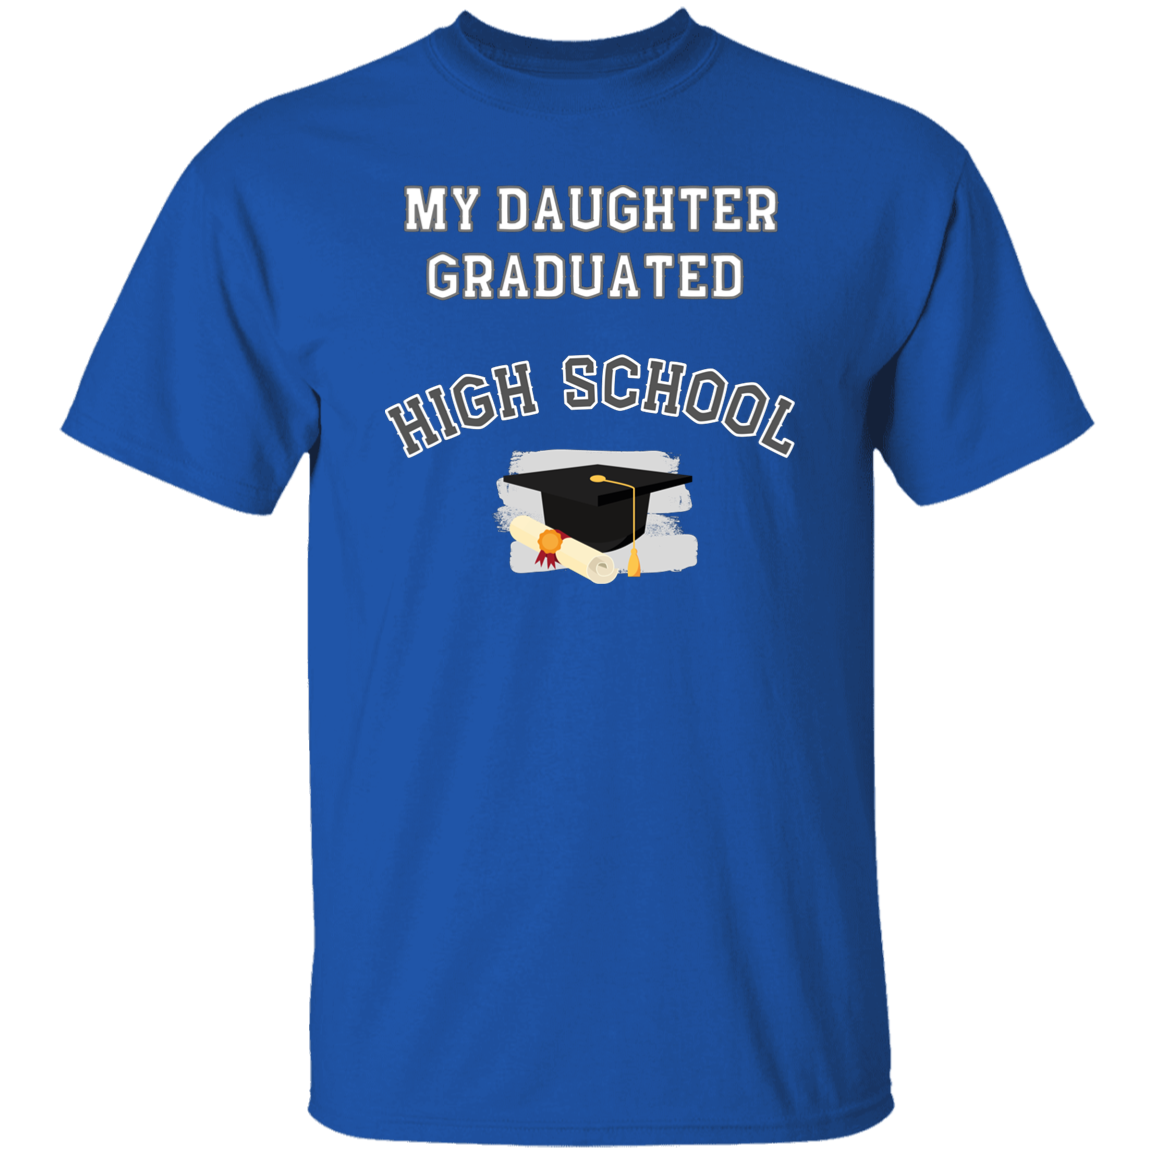 Daughter Graduated High School